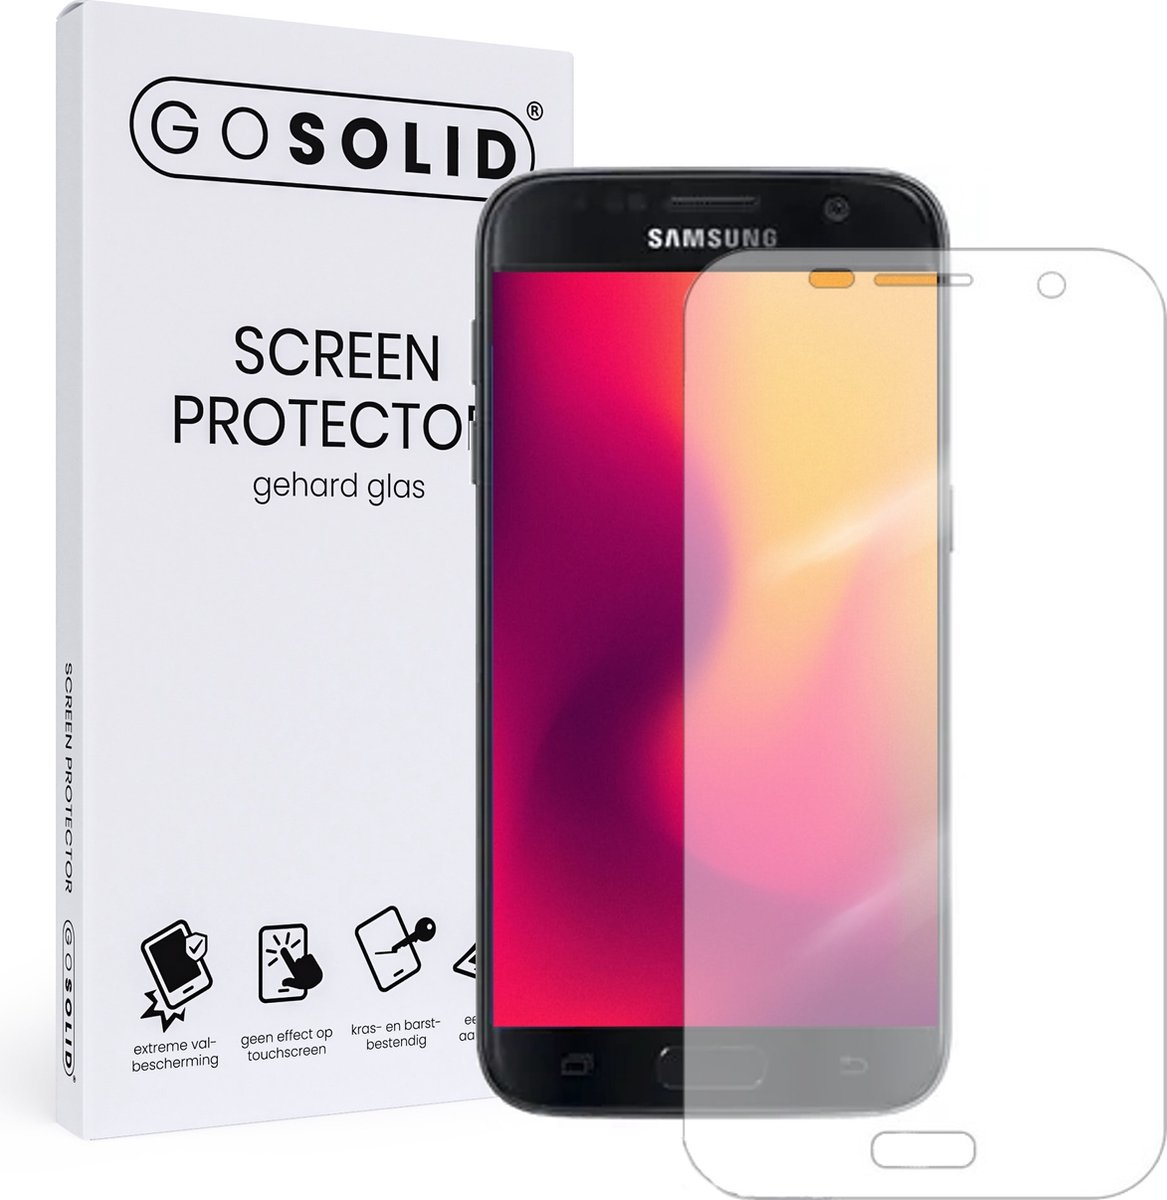 Go Solid! Screenprotector Voor Samsung Galaxy S6 Edge